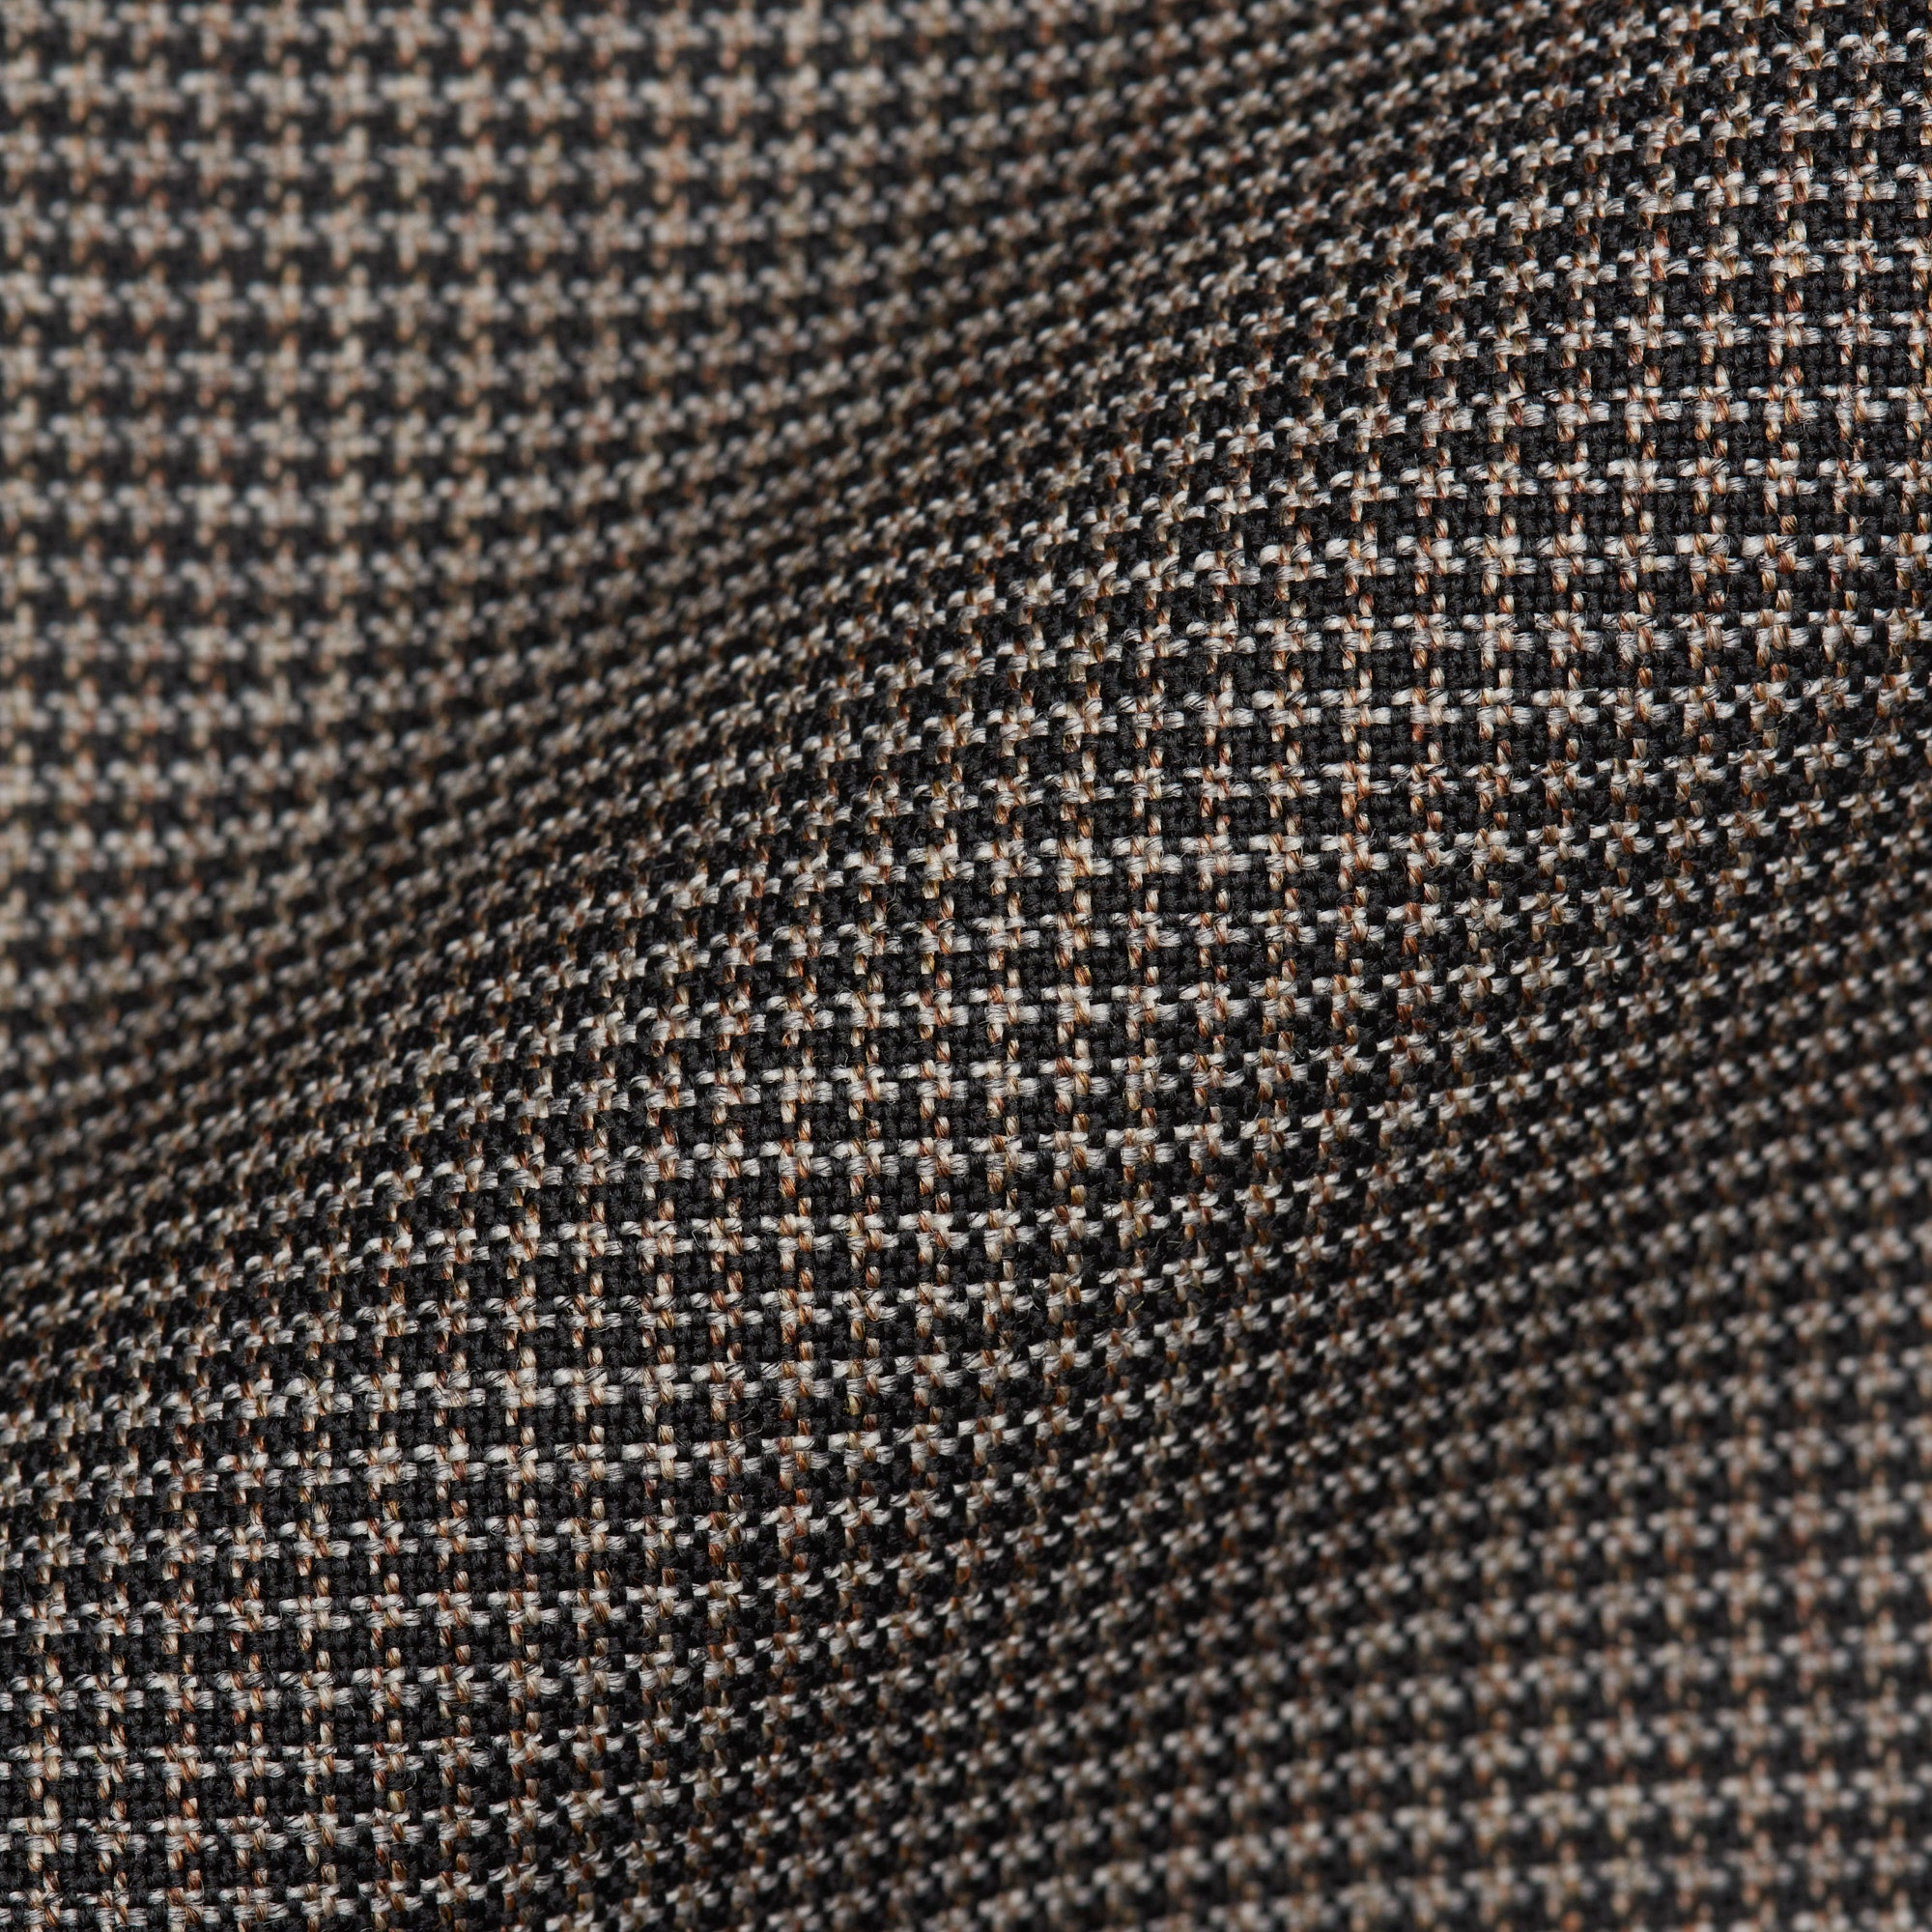 BESPOKE ATHENS Handmade Gray Wool Single Inward Pleated Pants 52 NEW US 36 BESPOKE ATHENS